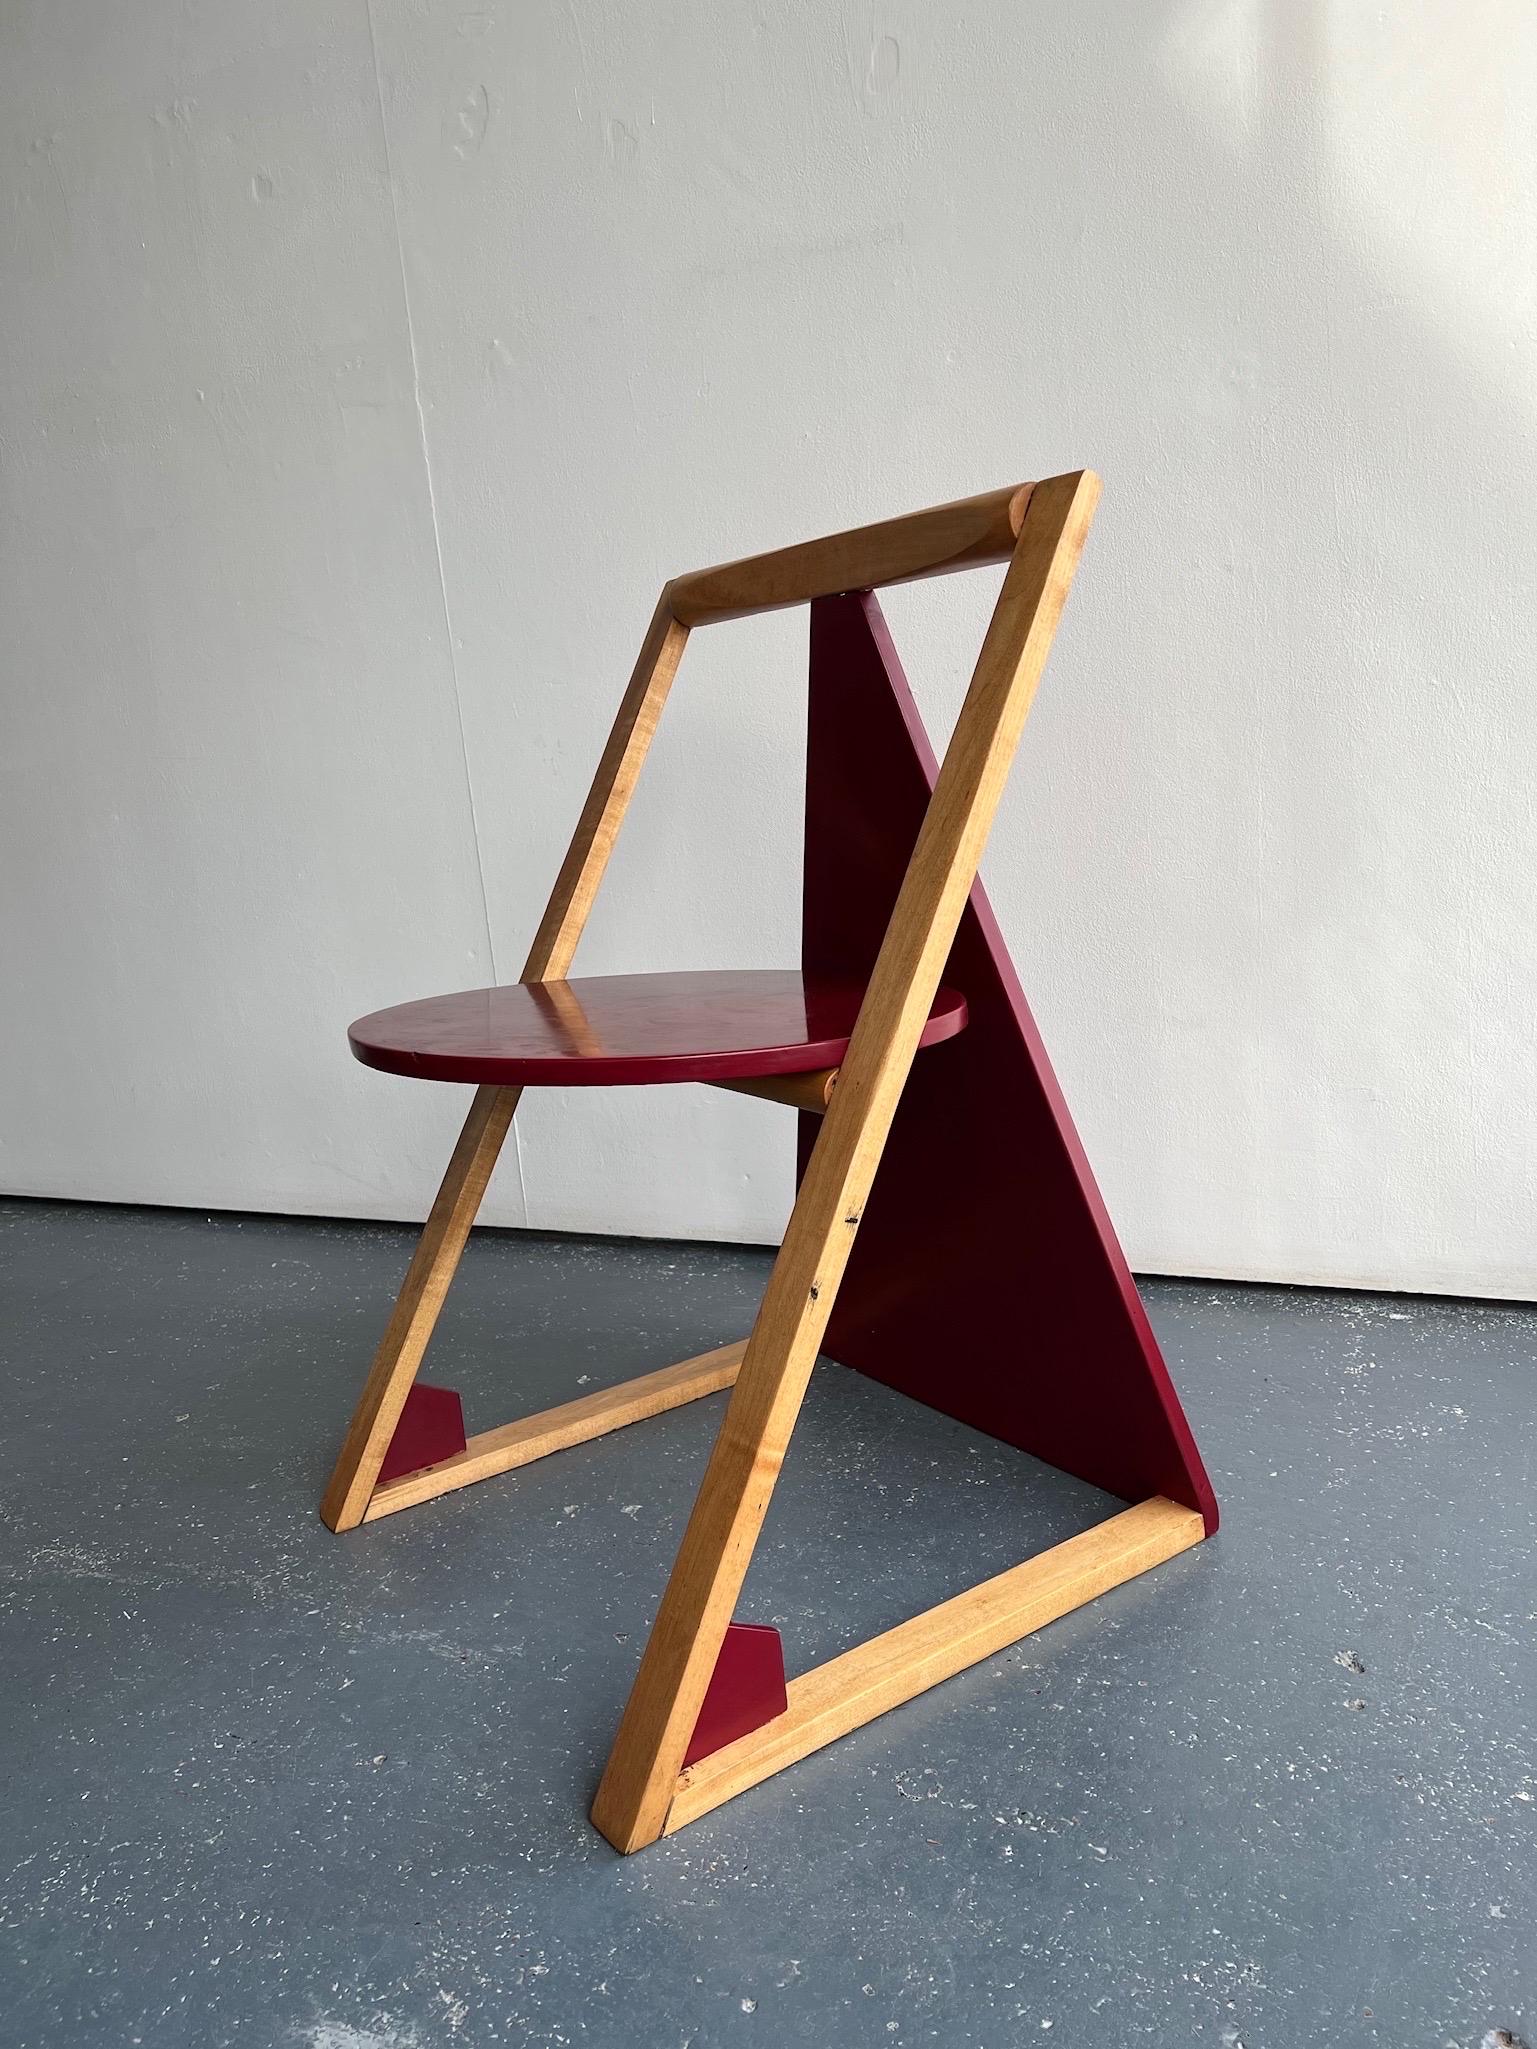 Triangular Wooden Memphis Style Chair 2